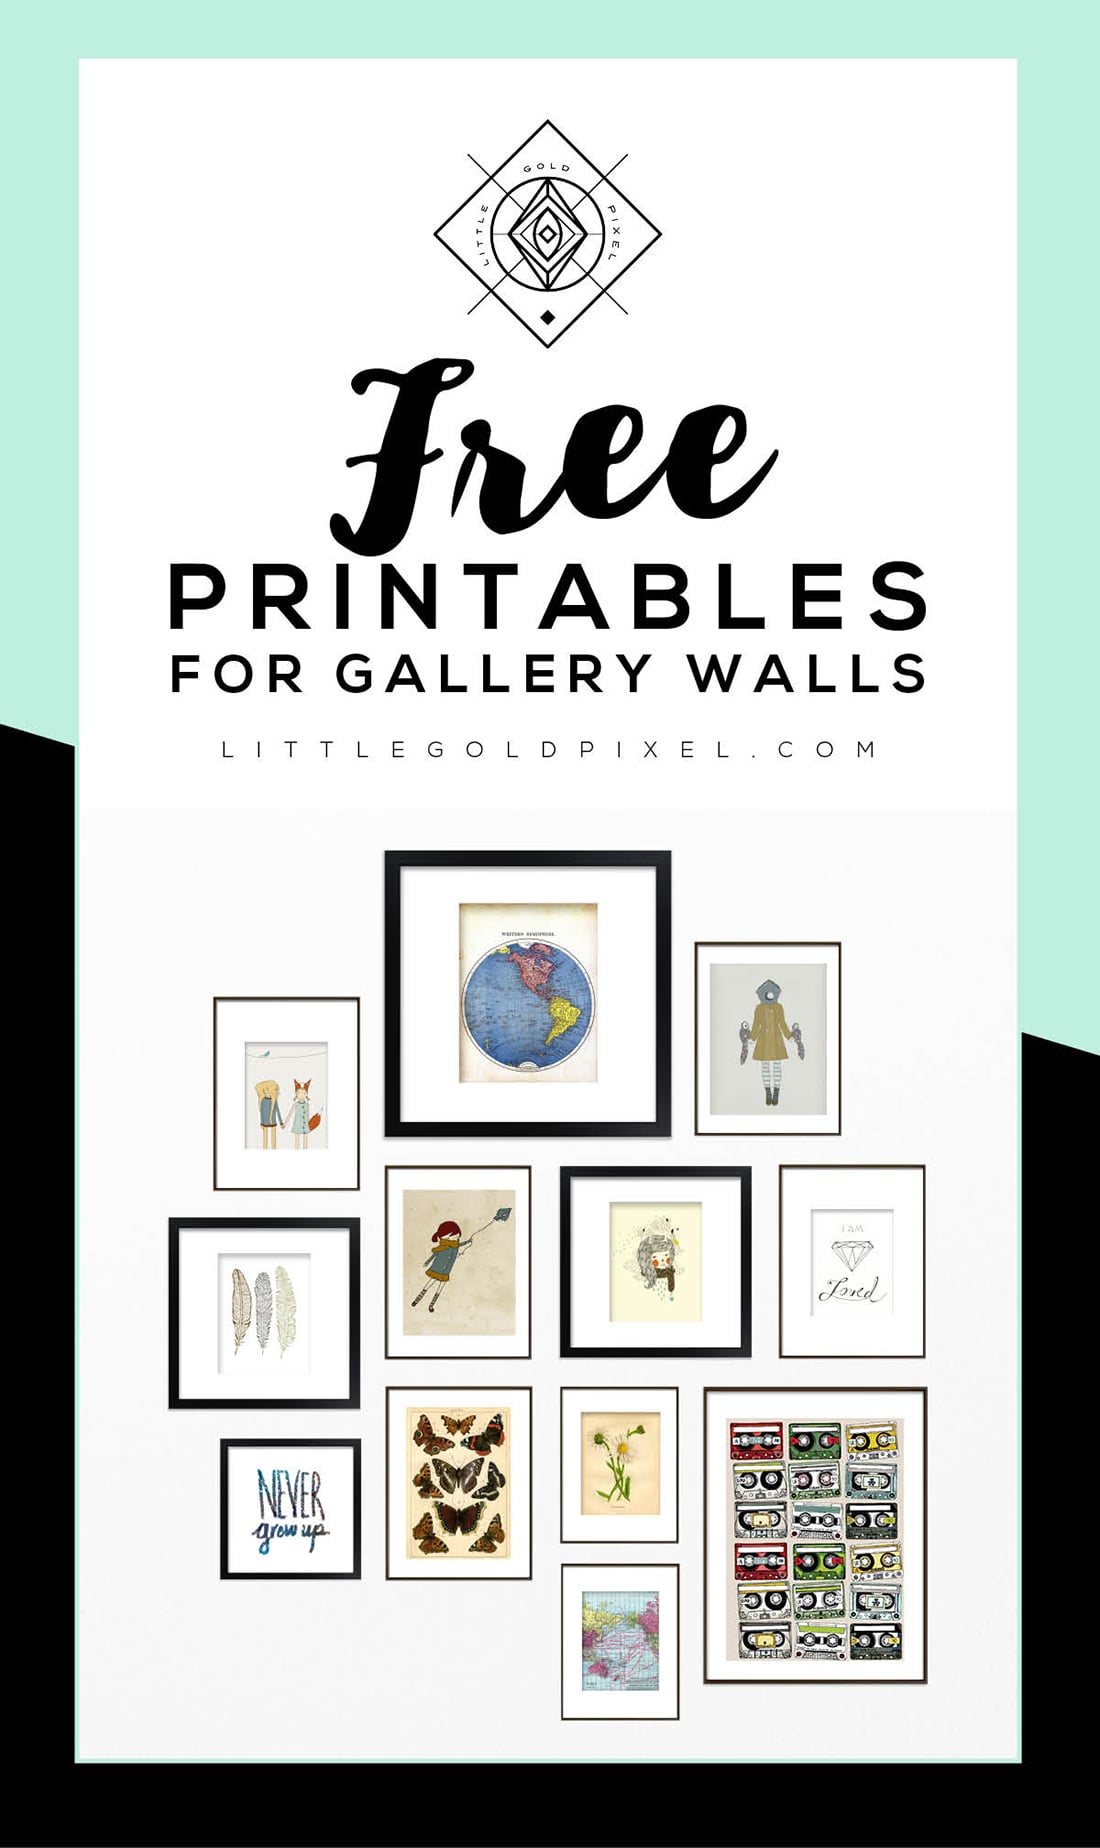 26 Free Printables For Gallery Walls • Little Gold Pixel • An Art Printable Roundup • #printables #freebies #freeprintables #freeart #freeprints #gallerywall #gallerywallideas #gallerywallart